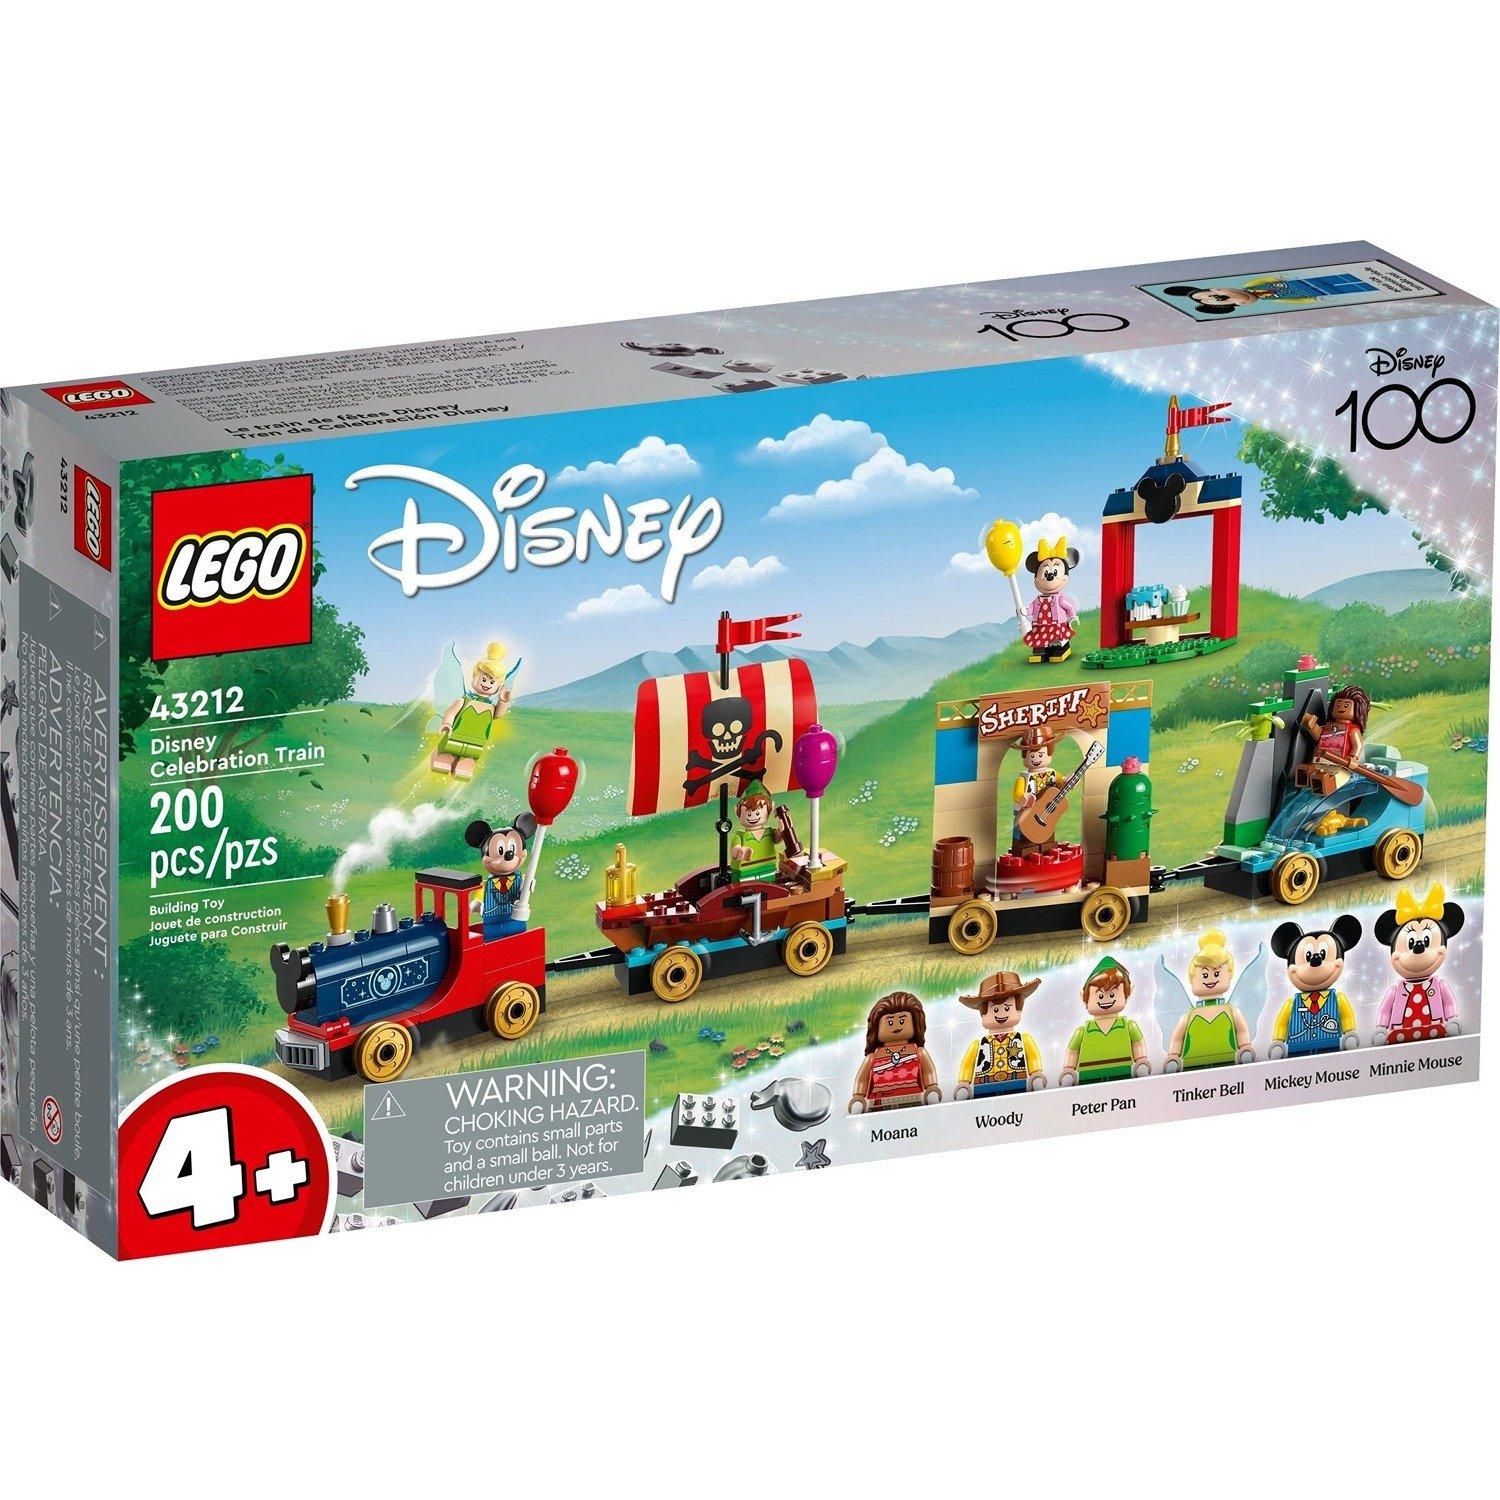 43212 Disney Celebration Train Set